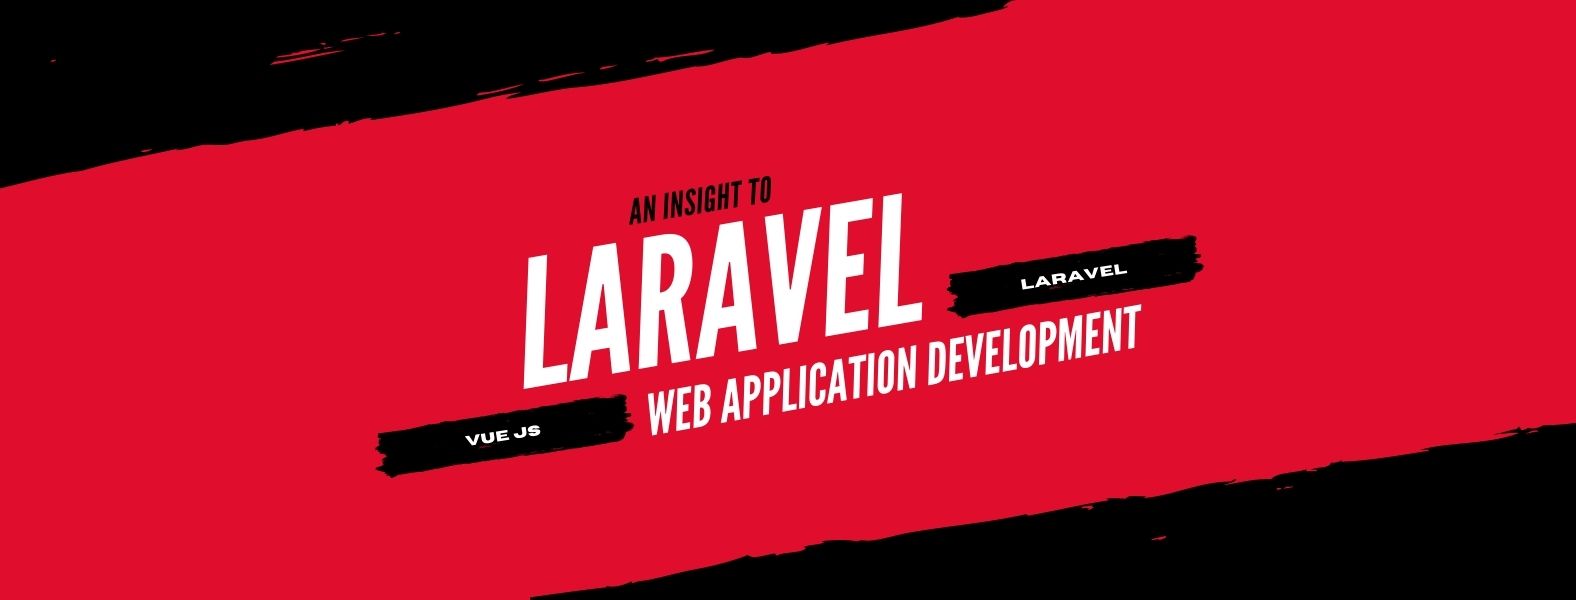 An insight into the Laravel Web Application Development